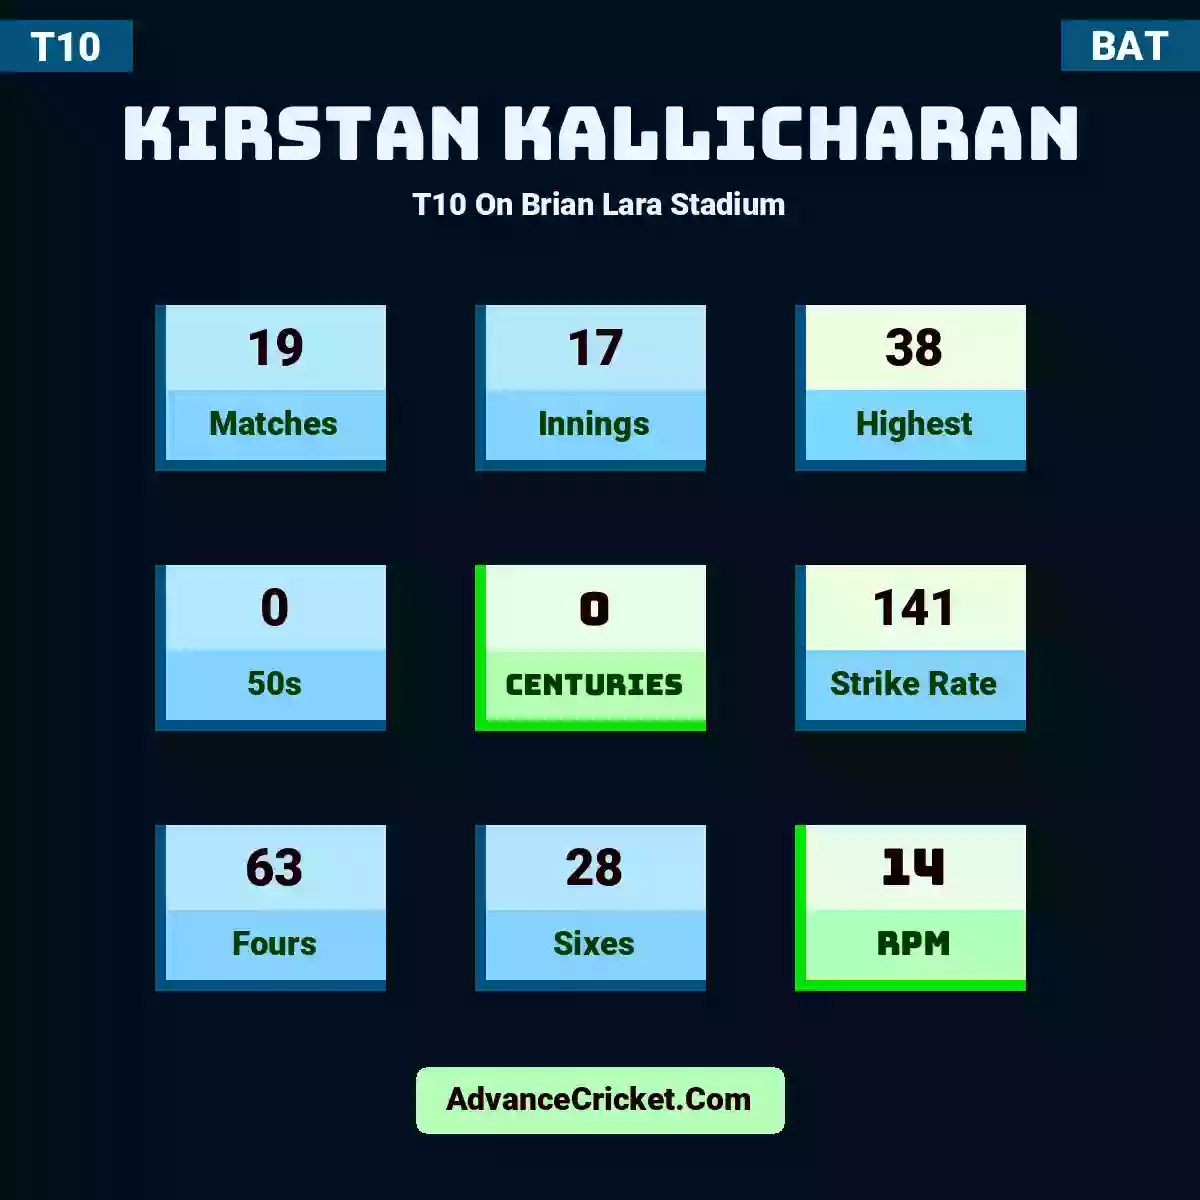 Kirstan Kallicharan T10  On Brian Lara Stadium, Kirstan Kallicharan played 19 matches, scored 38 runs as highest, 0 half-centuries, and 0 centuries, with a strike rate of 141. K.Kallicharan hit 63 fours and 28 sixes, with an RPM of 14.